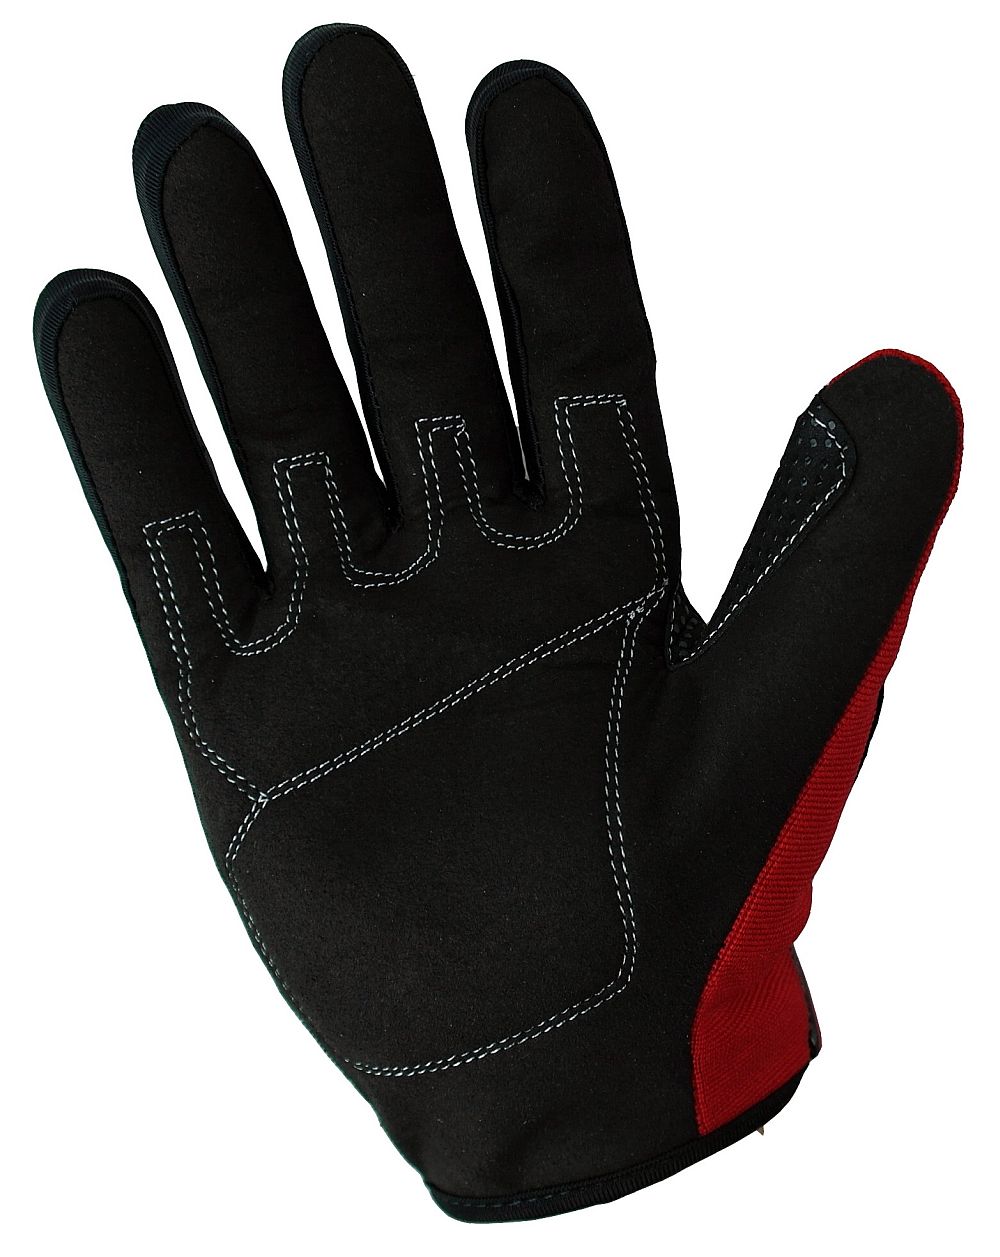 Heyberry Motocross Offroad MTB MX Handschuhe schwarz rot Gr. S - XXL